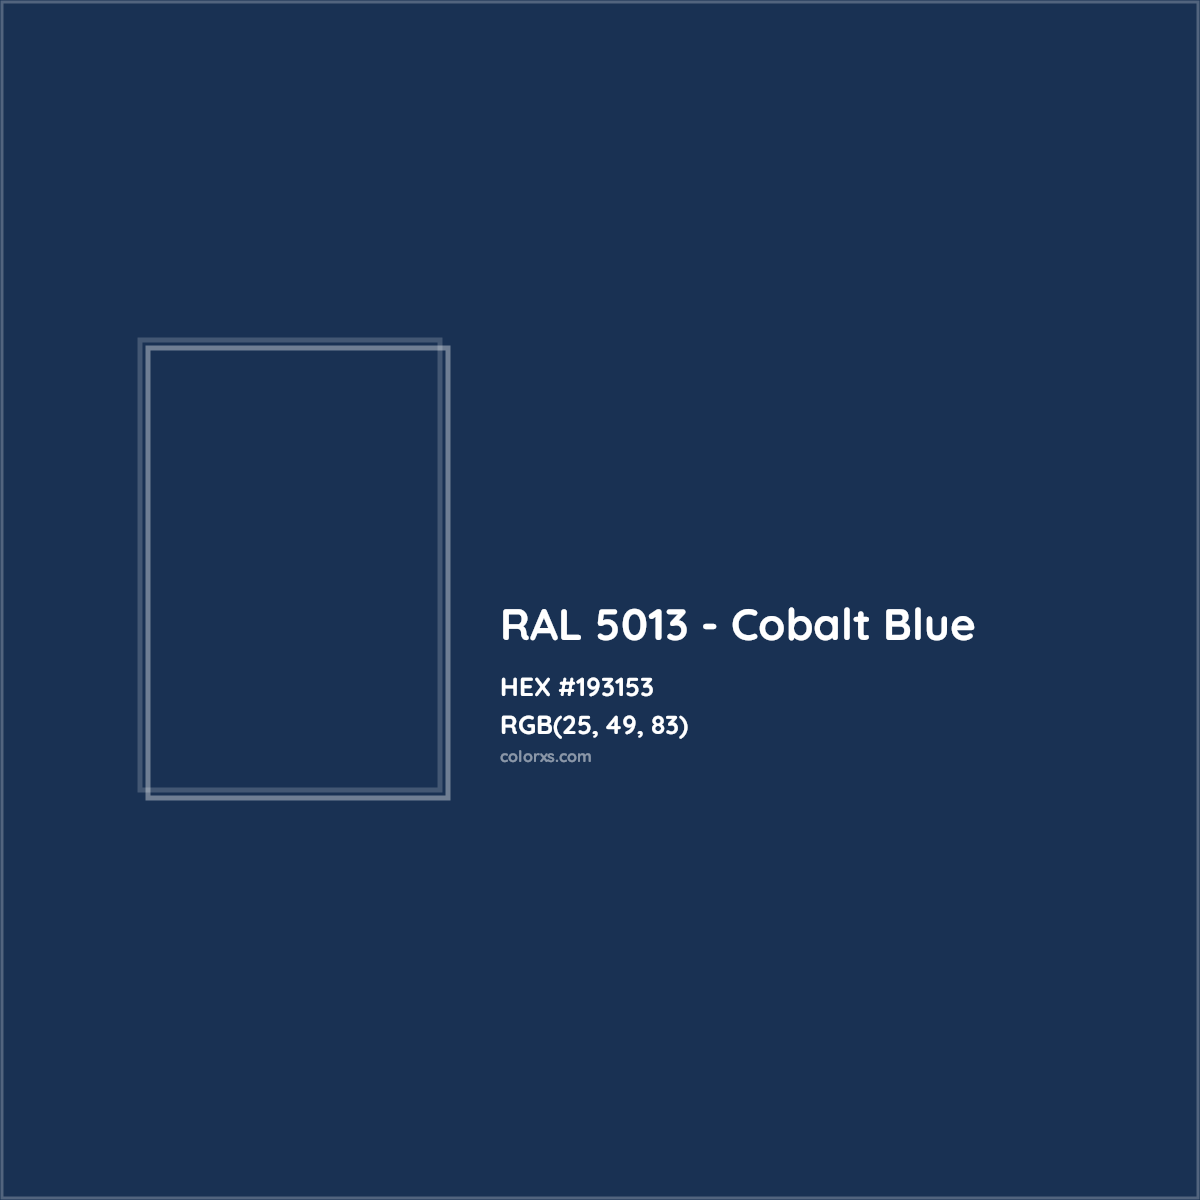 1. "Cobalt Blue and Gold Nail Art" - wide 3